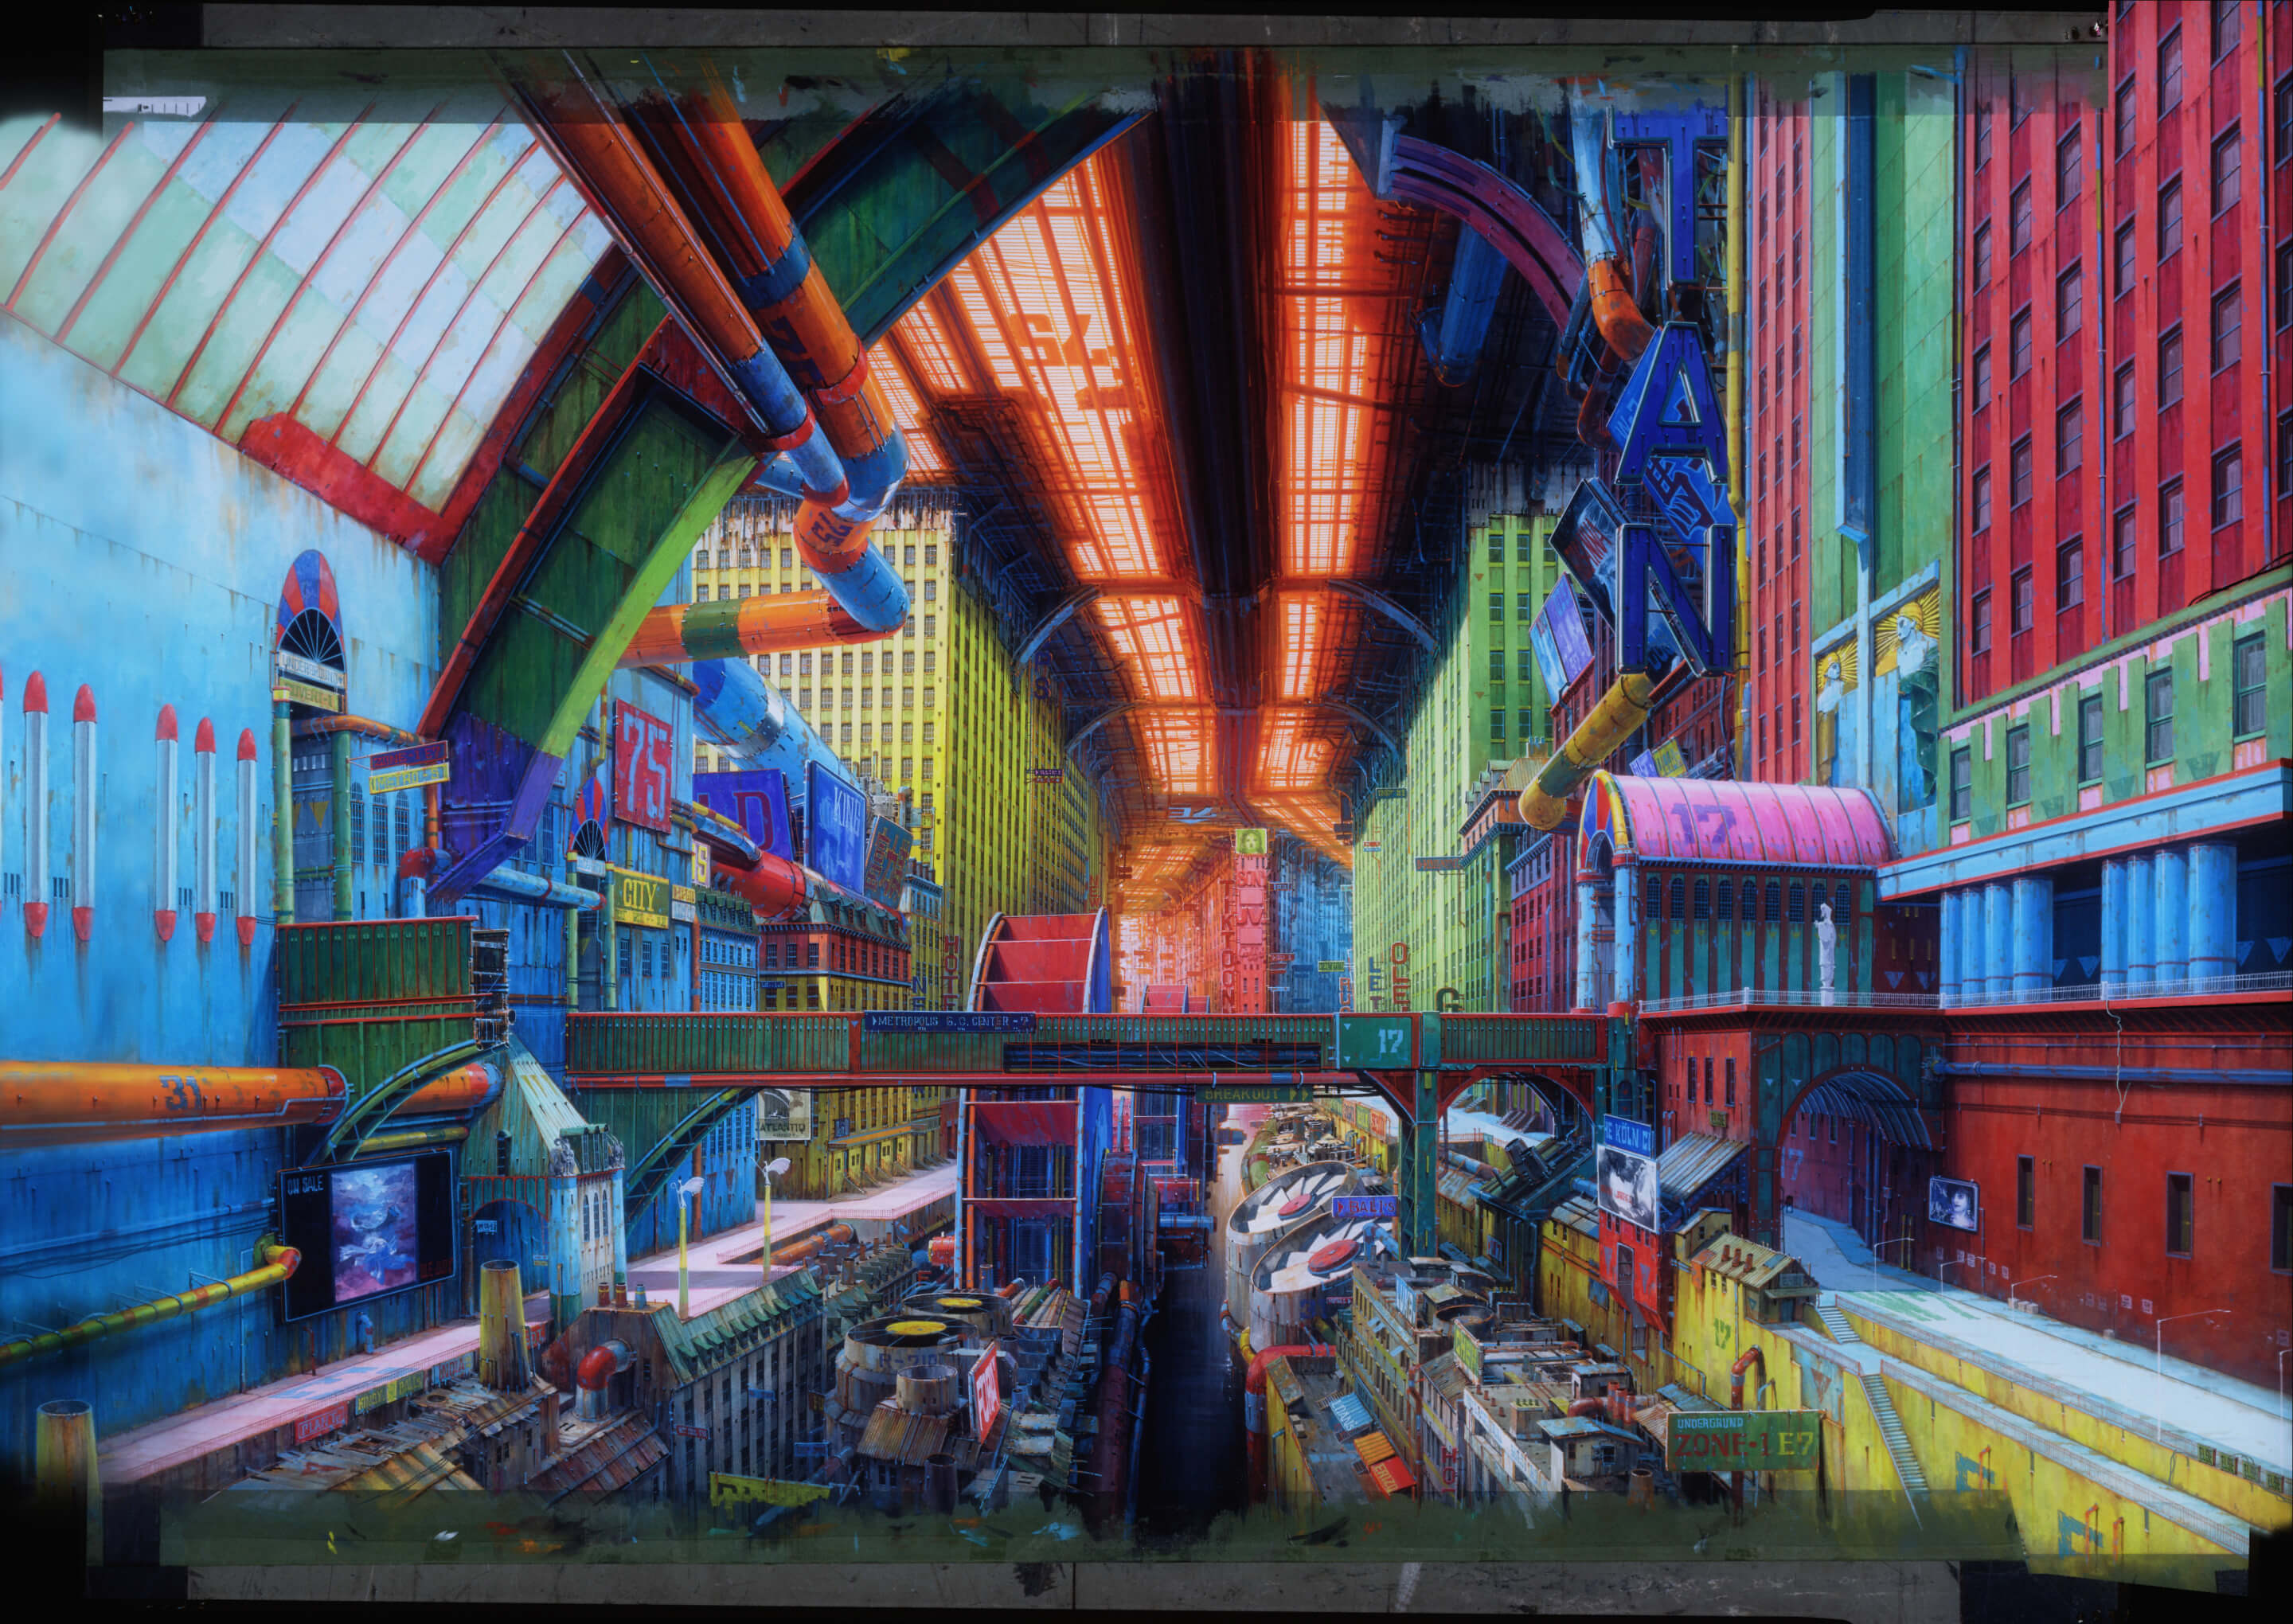 Steam Workshop::Kobe Bryant animated painting wallpaper